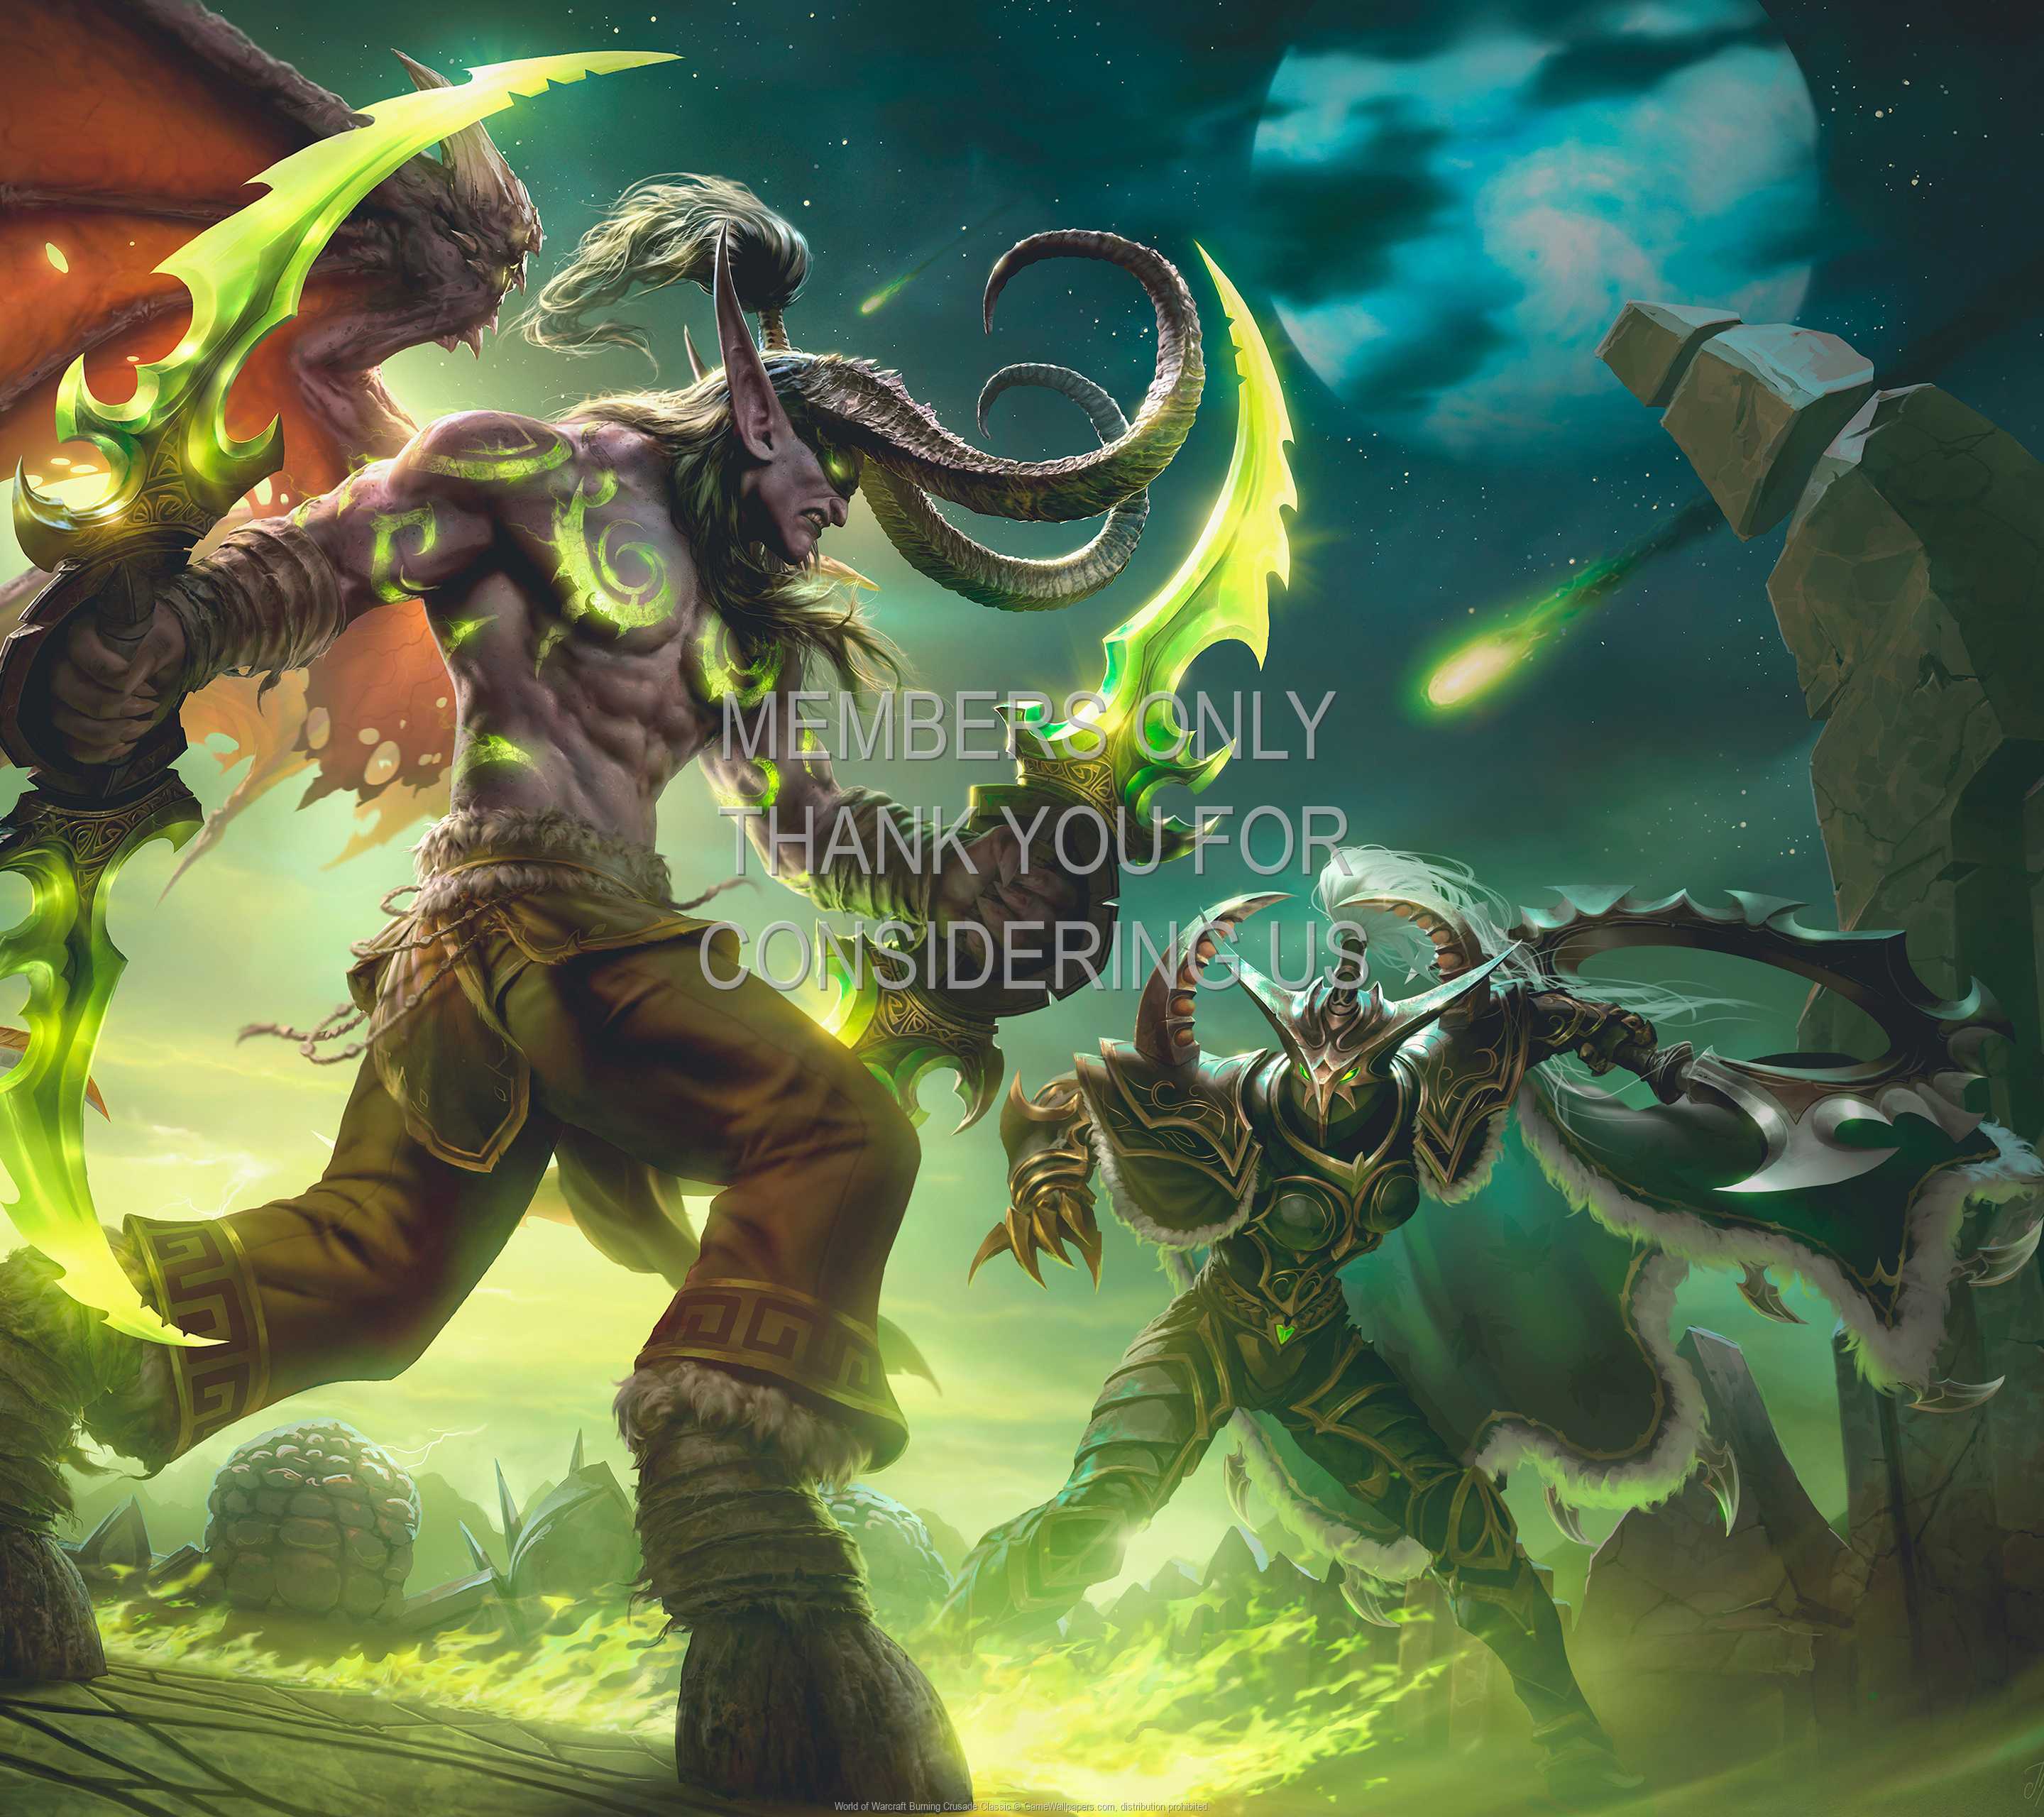 World of Warcraft: Burning Crusade Classic 1440p Horizontal Mobile wallpaper or background 02